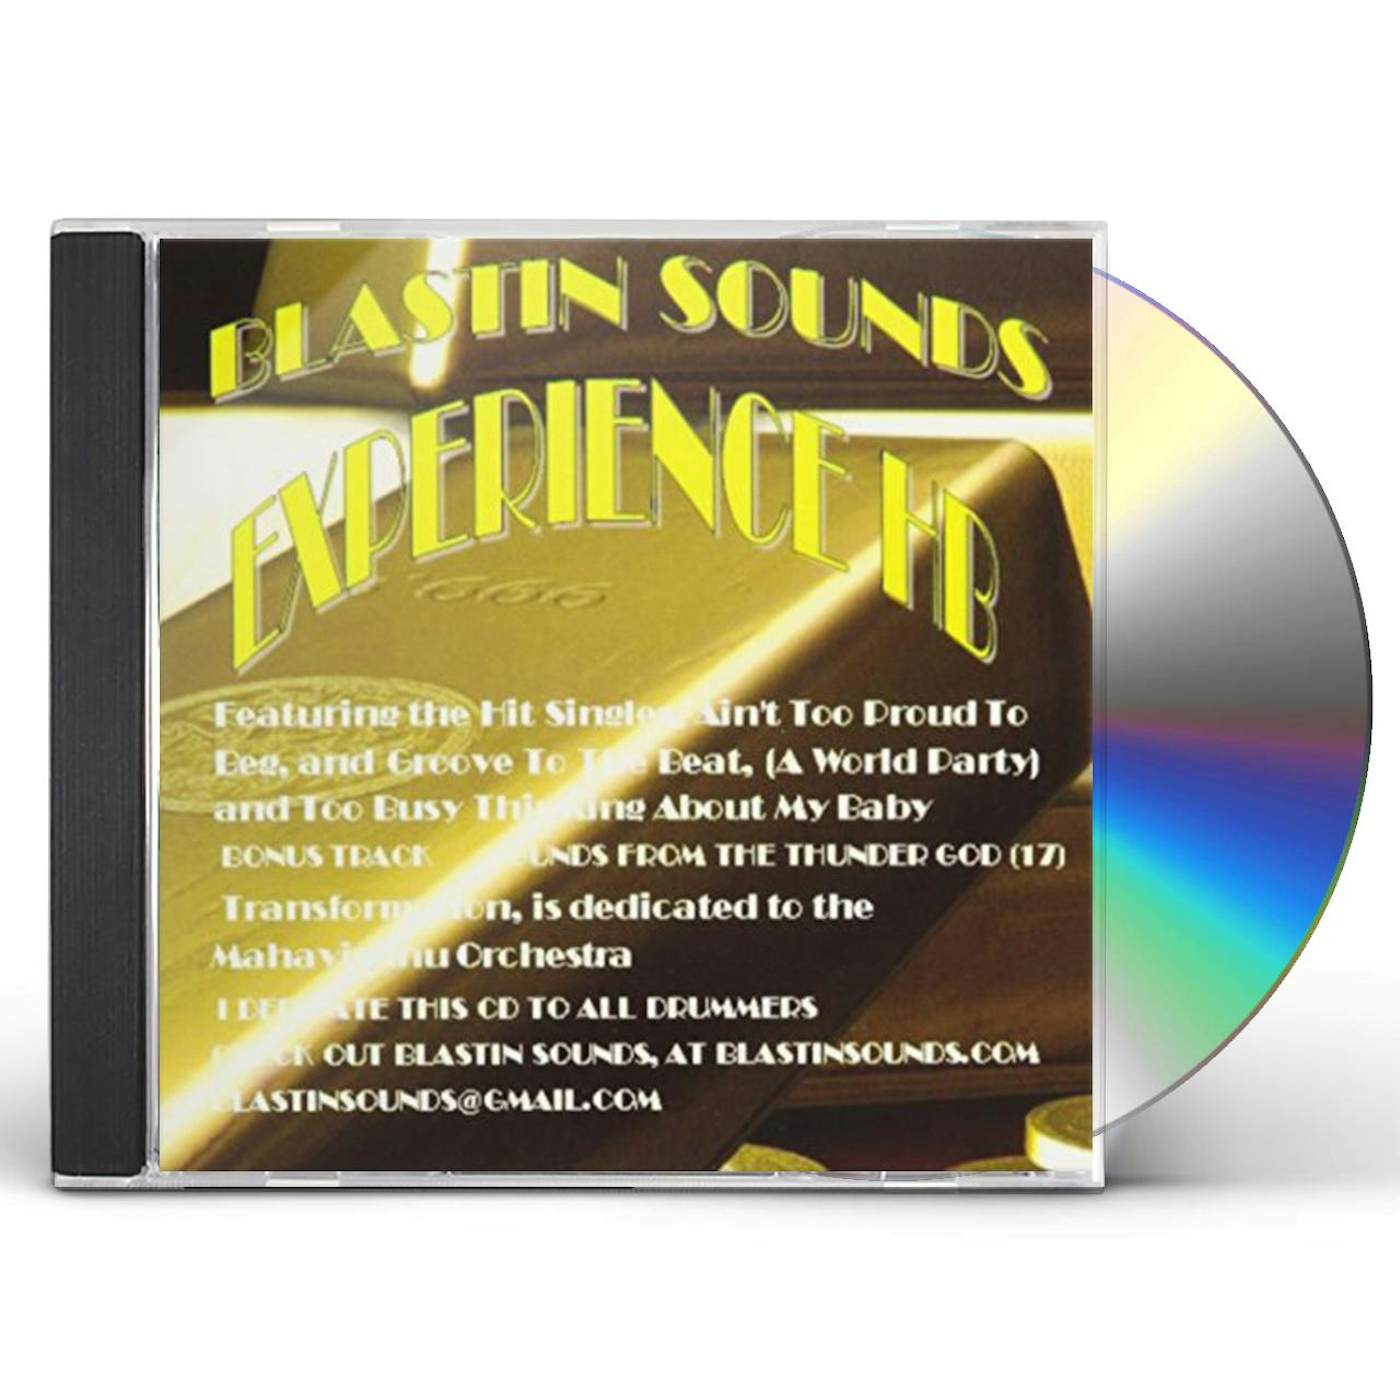 Blastin Sounds EXPERIENCE HB CD